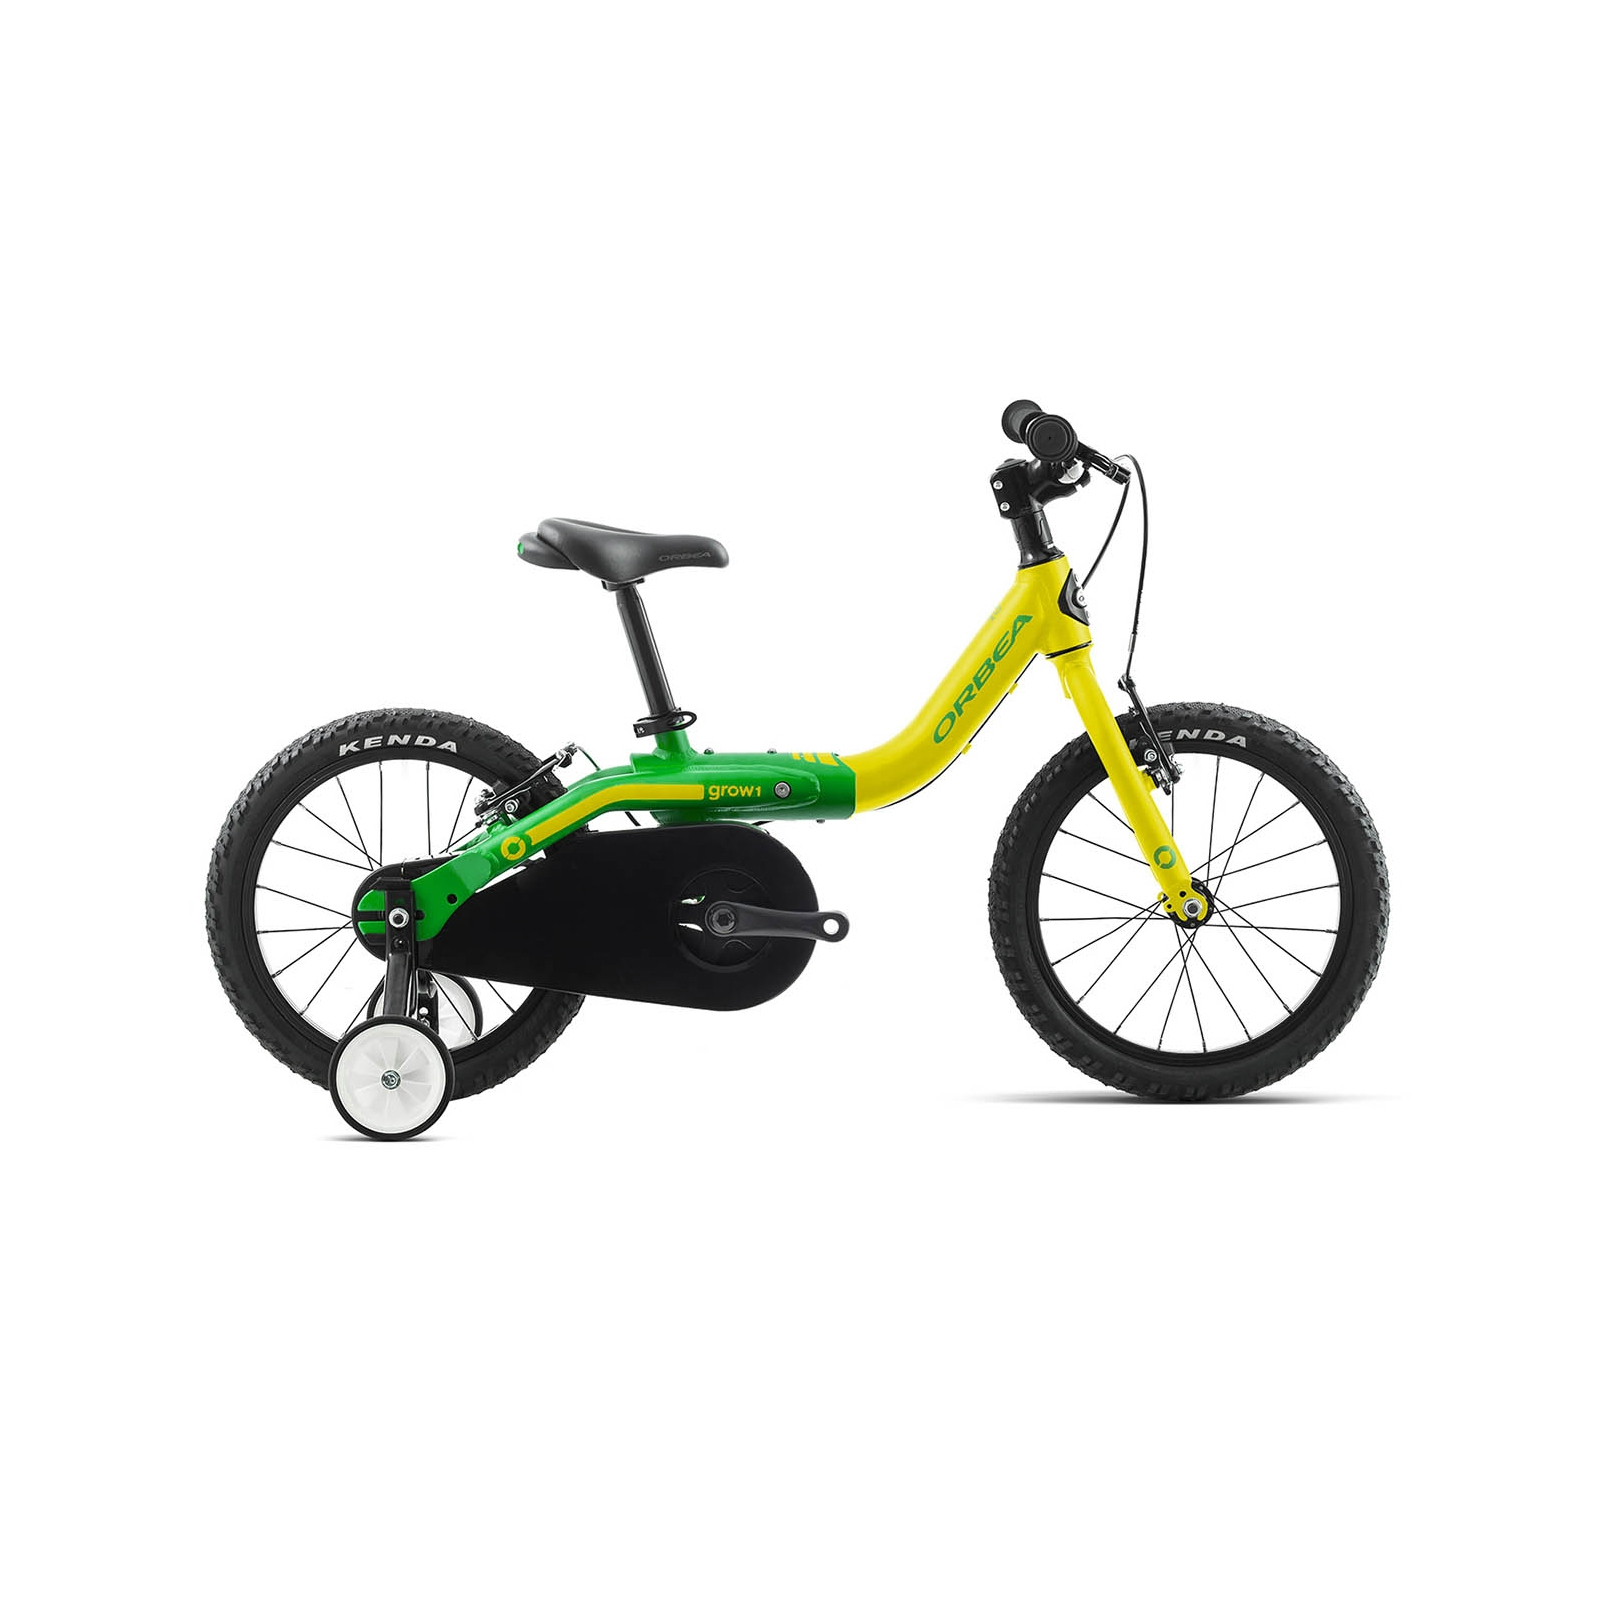 Детский велосипед Orbea Grow 1 16" 2019 Pistachio - Green (J00216K7)